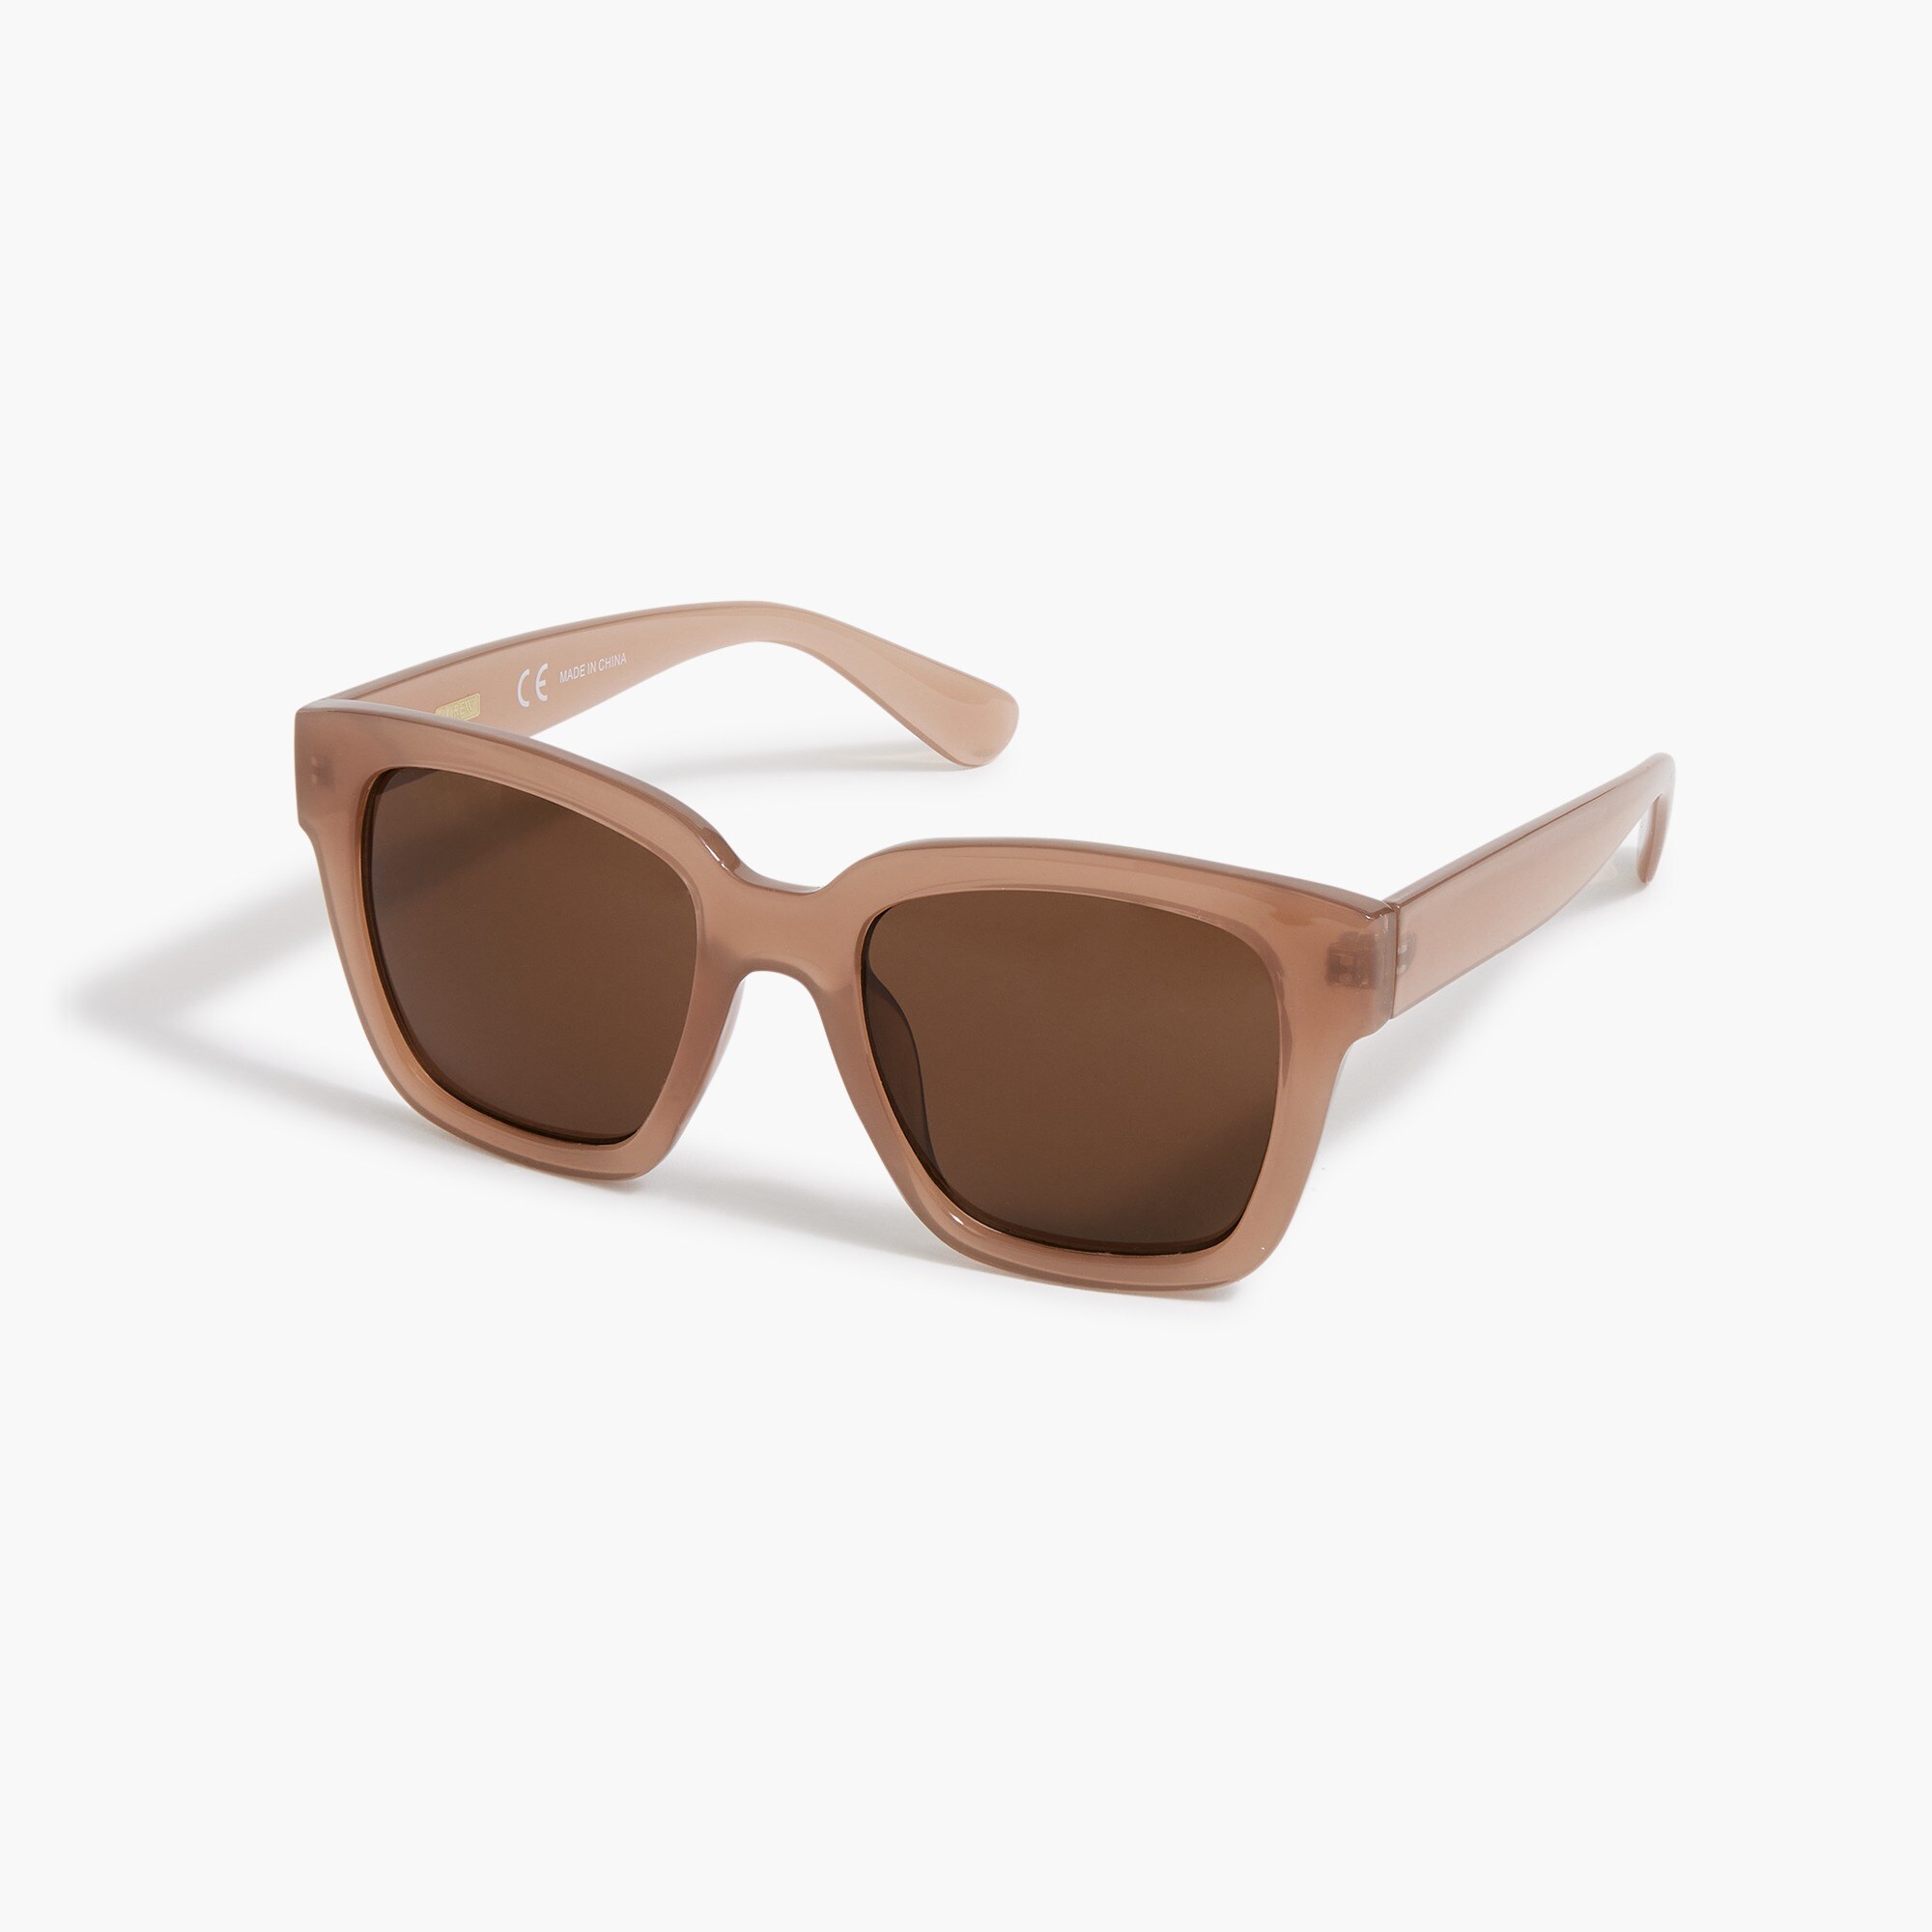  D-frame sunglasses